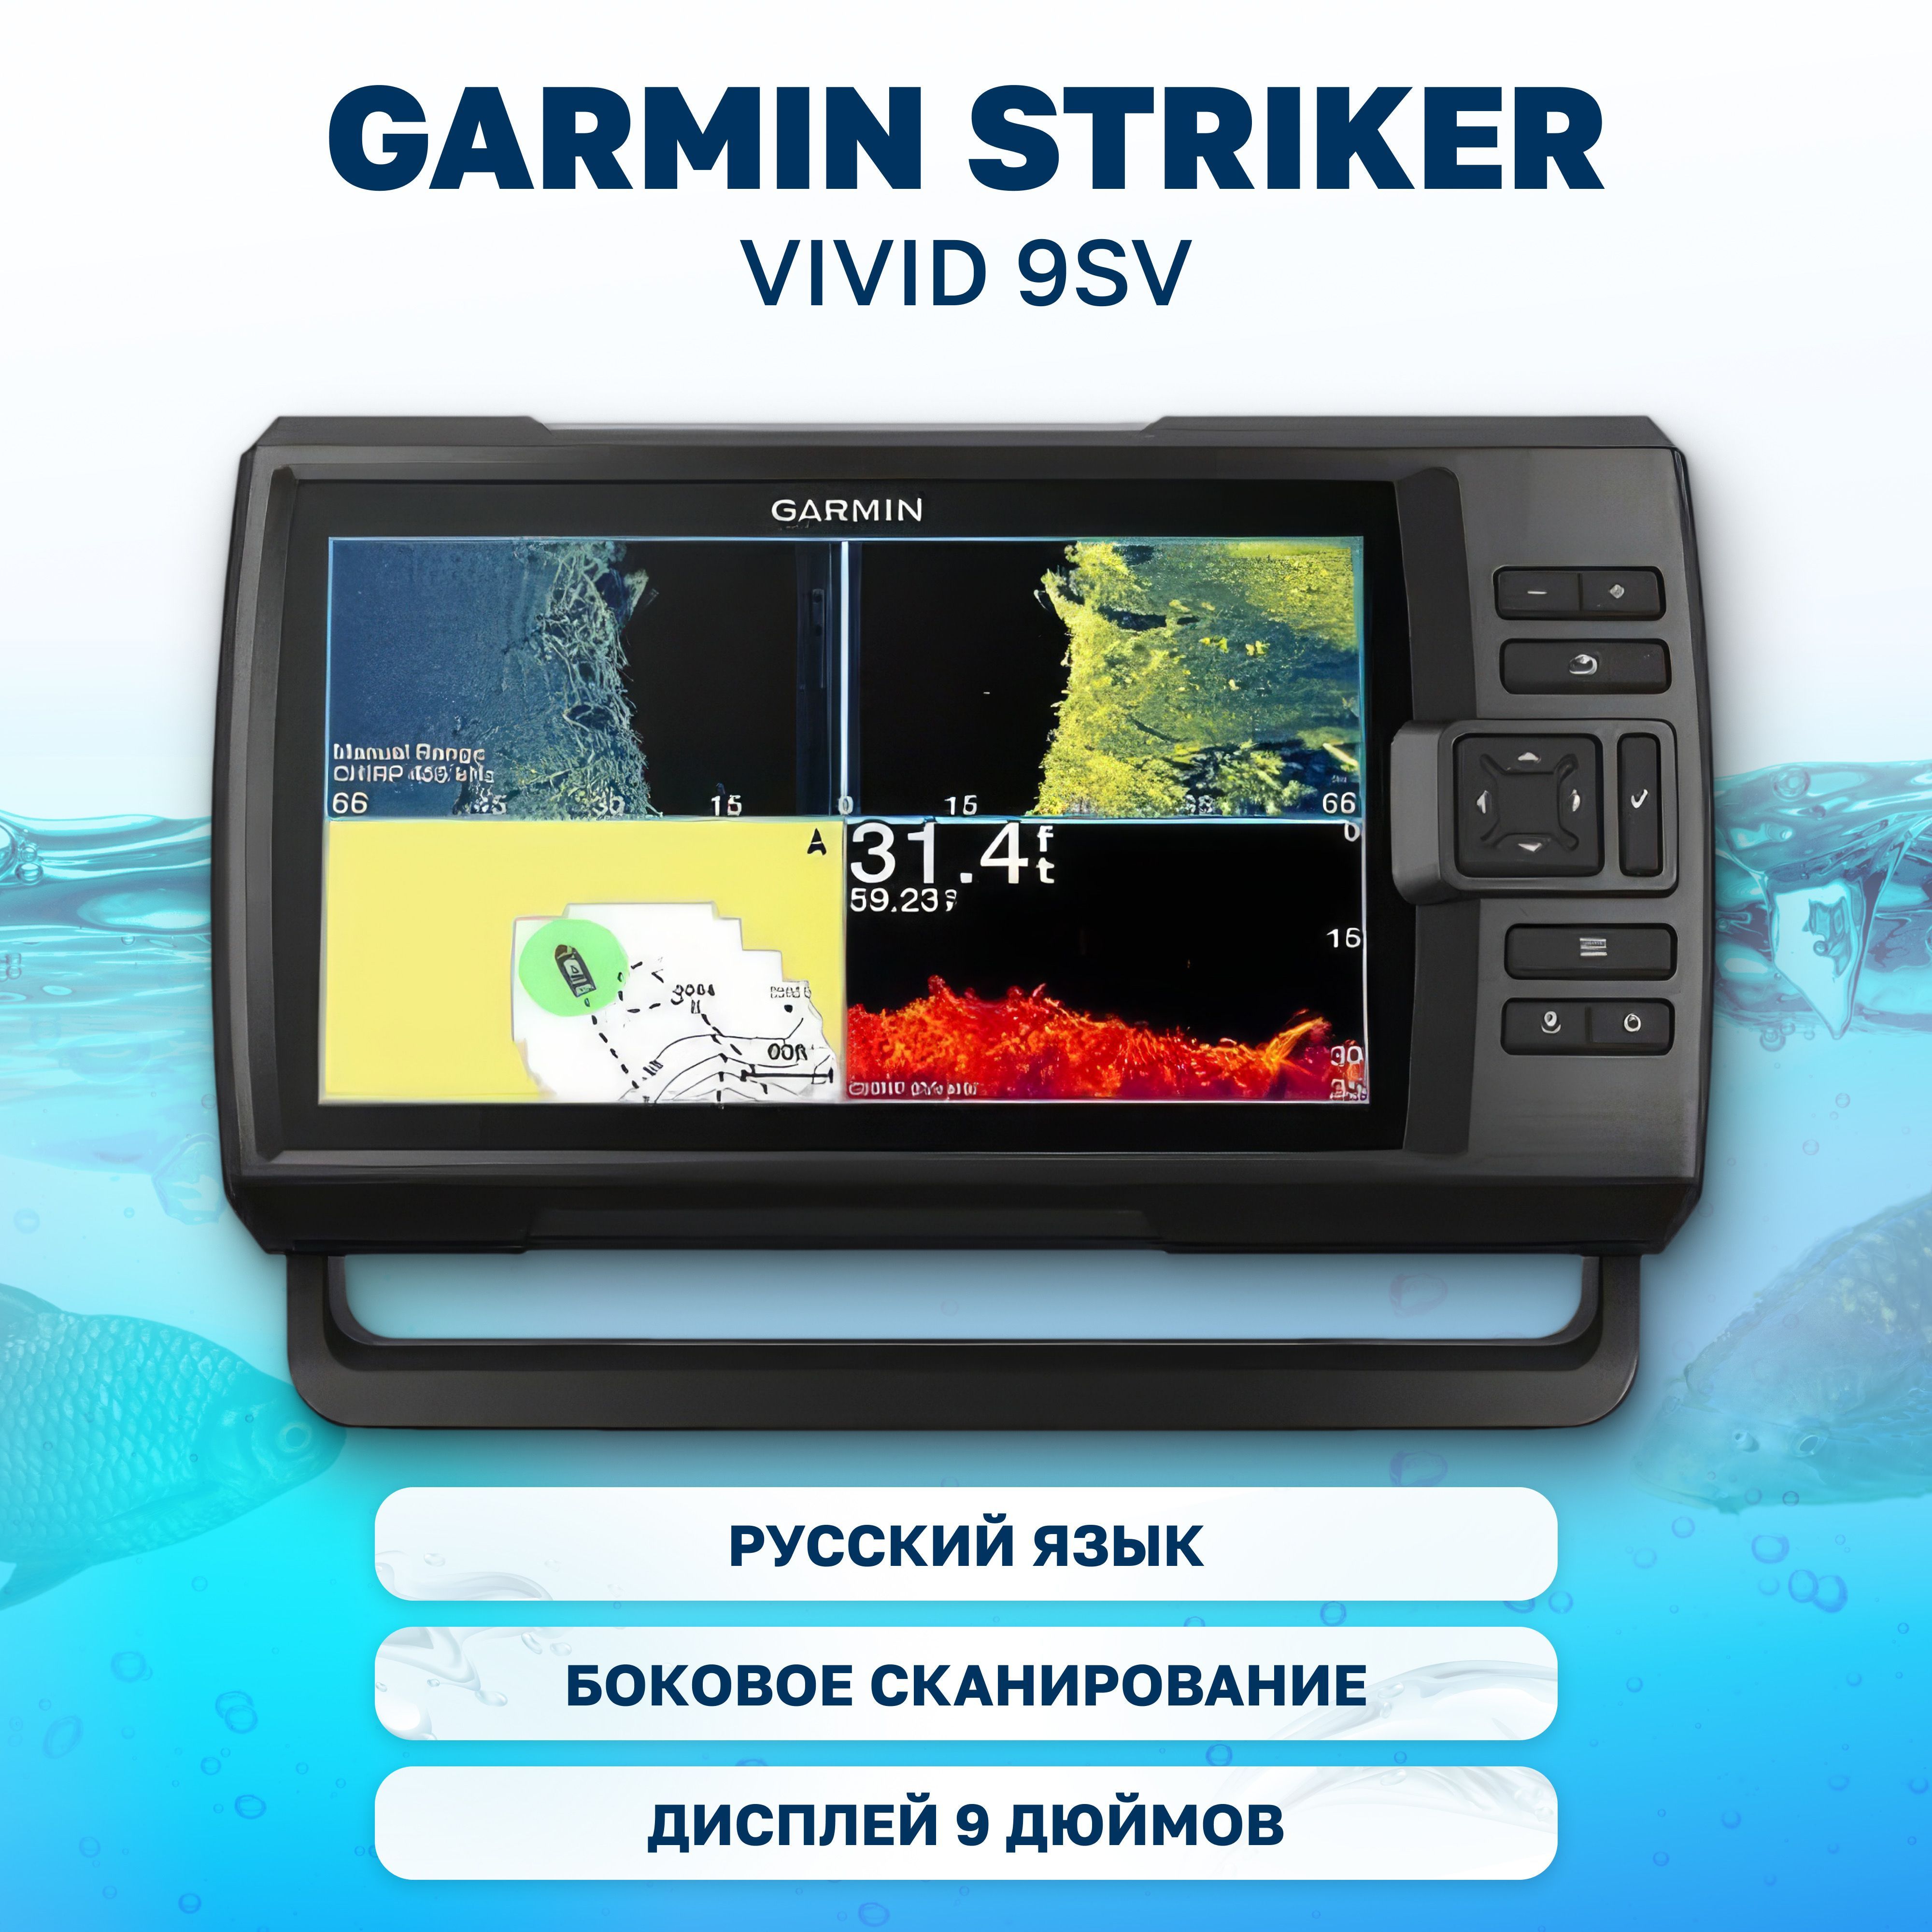 Страйкер вивид 9. Gt52hw-TM. Чехол для Garmin Striker vivid 9sv. Garmin Striker vivid 9sv +52 датчик цена. Garmin Striker vivid 7sv с датчиком gt52hw-TM цены.